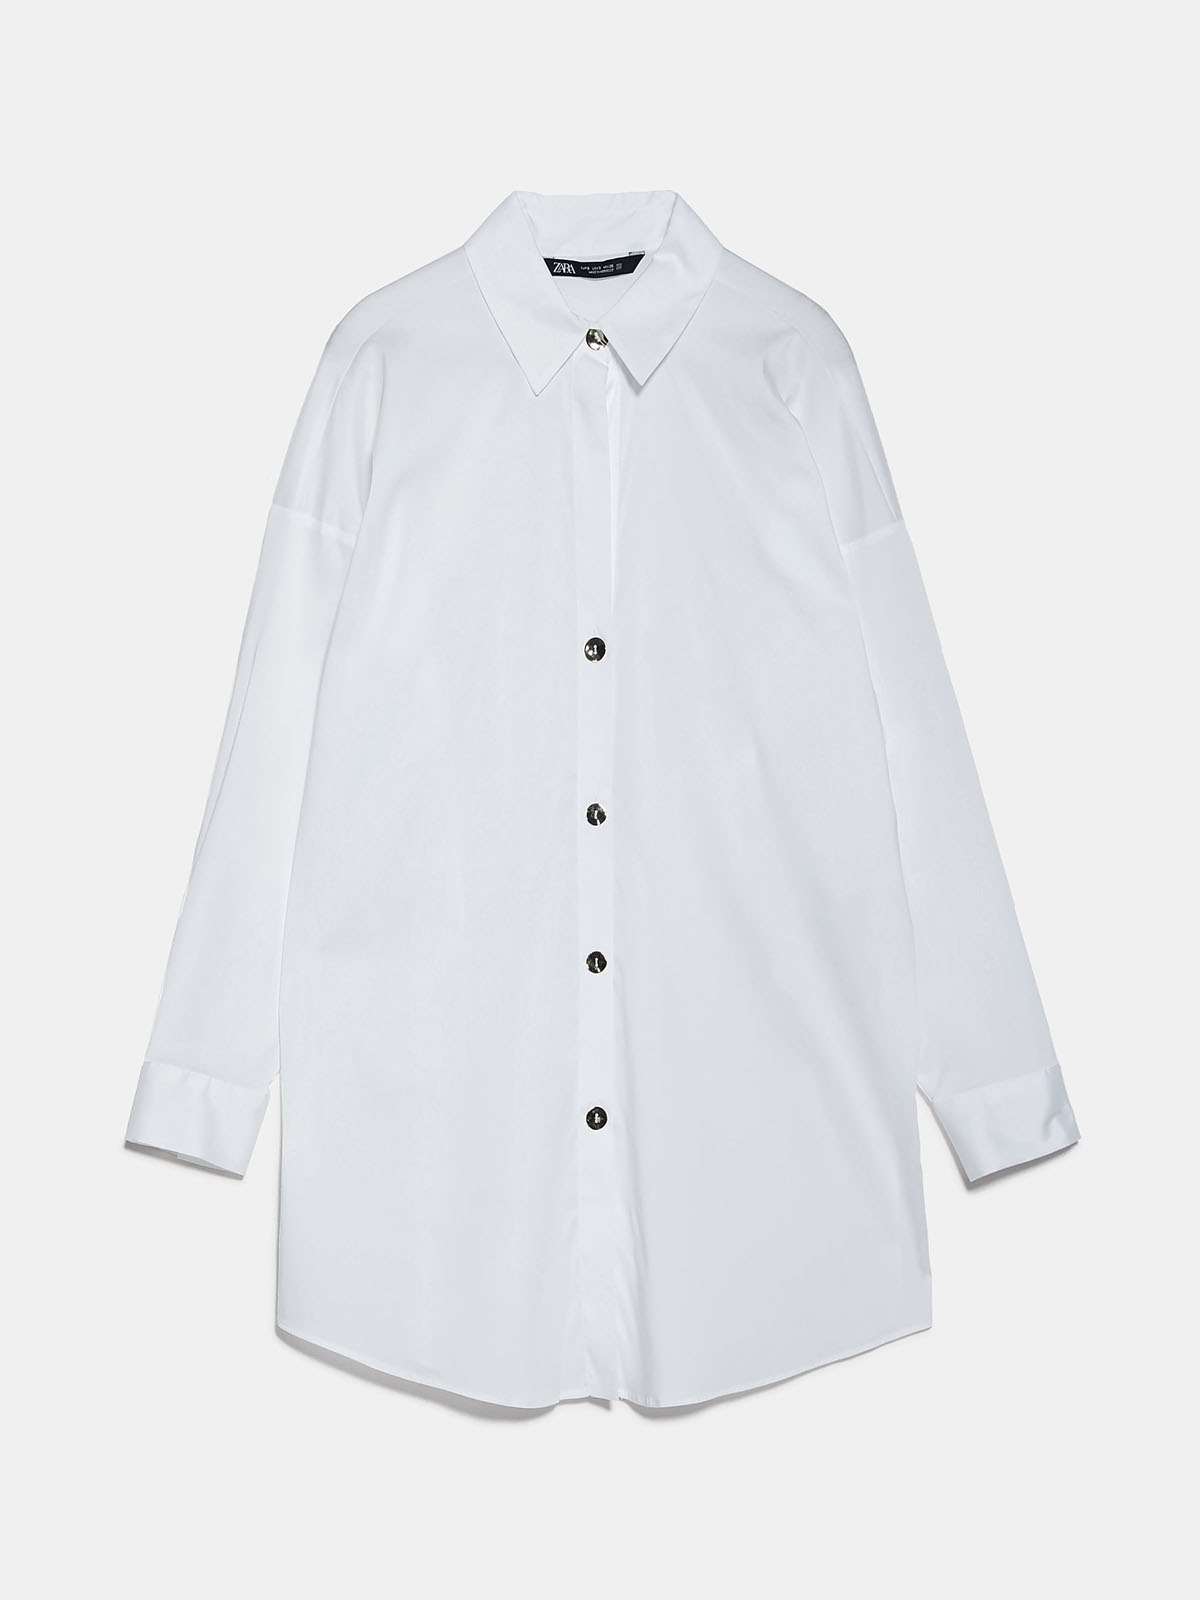 camisa-blanca-basica-larga-zara. Camisa blanca básica